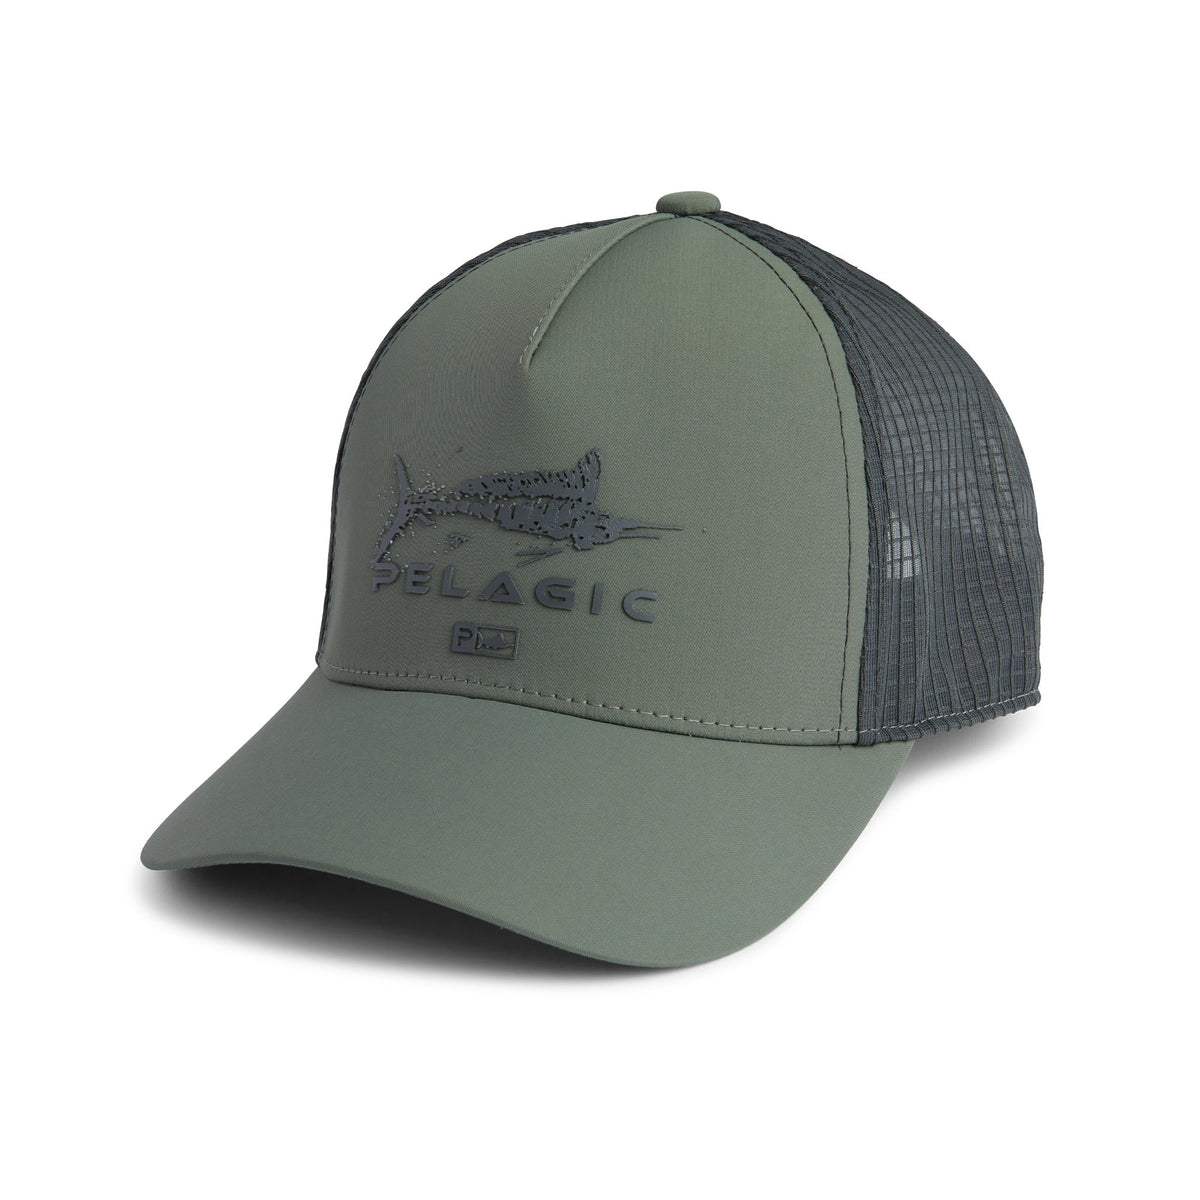 Pelagic Echo Gyotaku Performance Trucker Hats